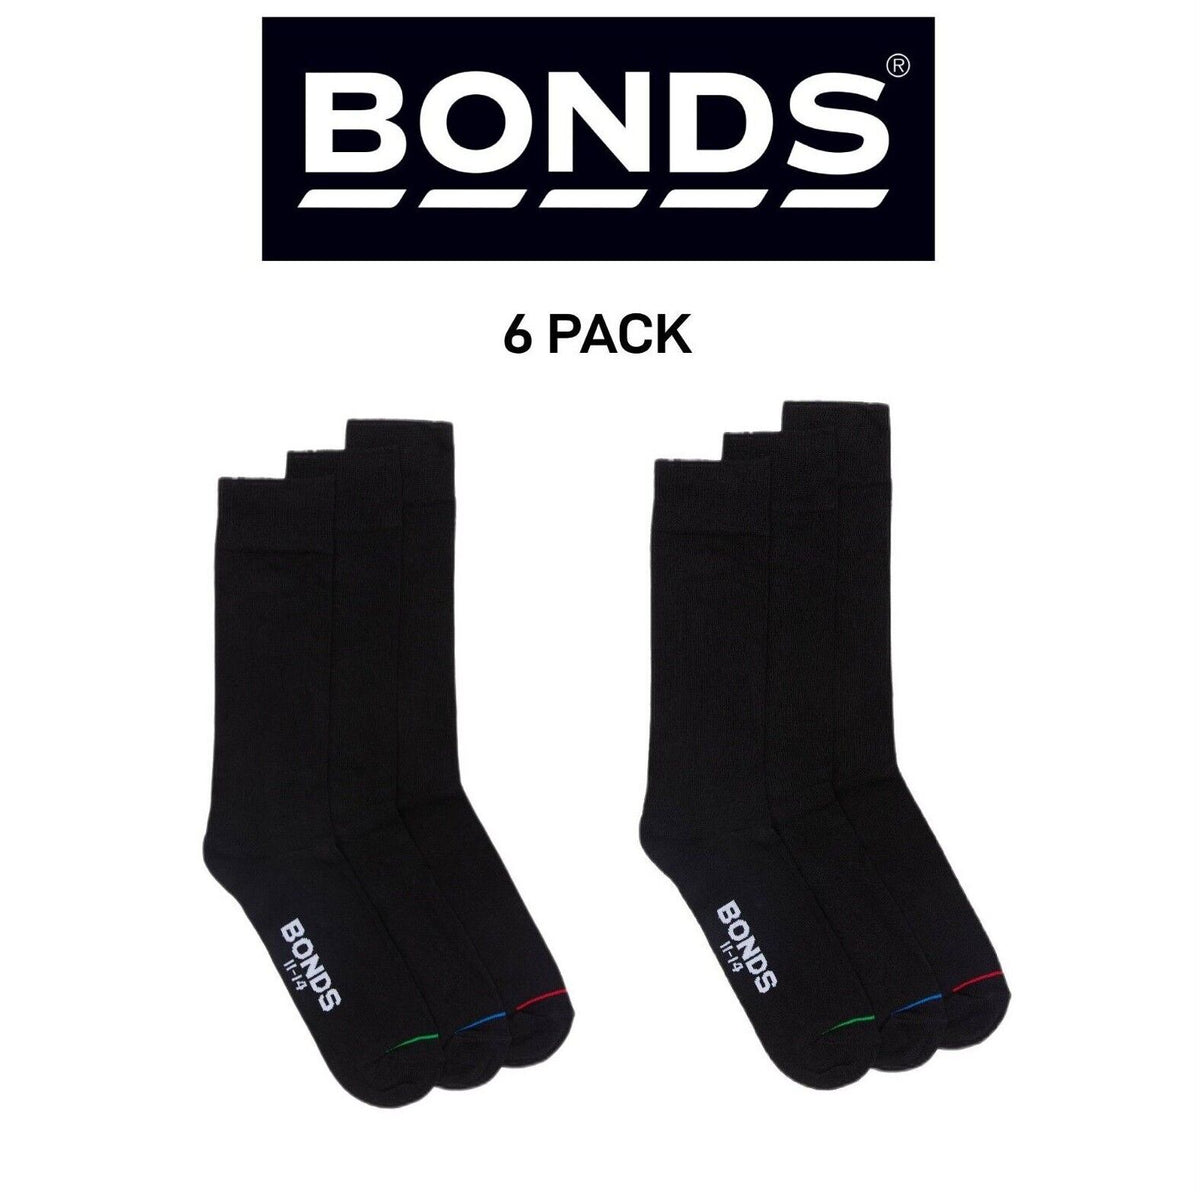 Bonds Mens Oxford Crew Socks Soft Cotton Comfy High Ribbed Ankle 6 Pack S8471N